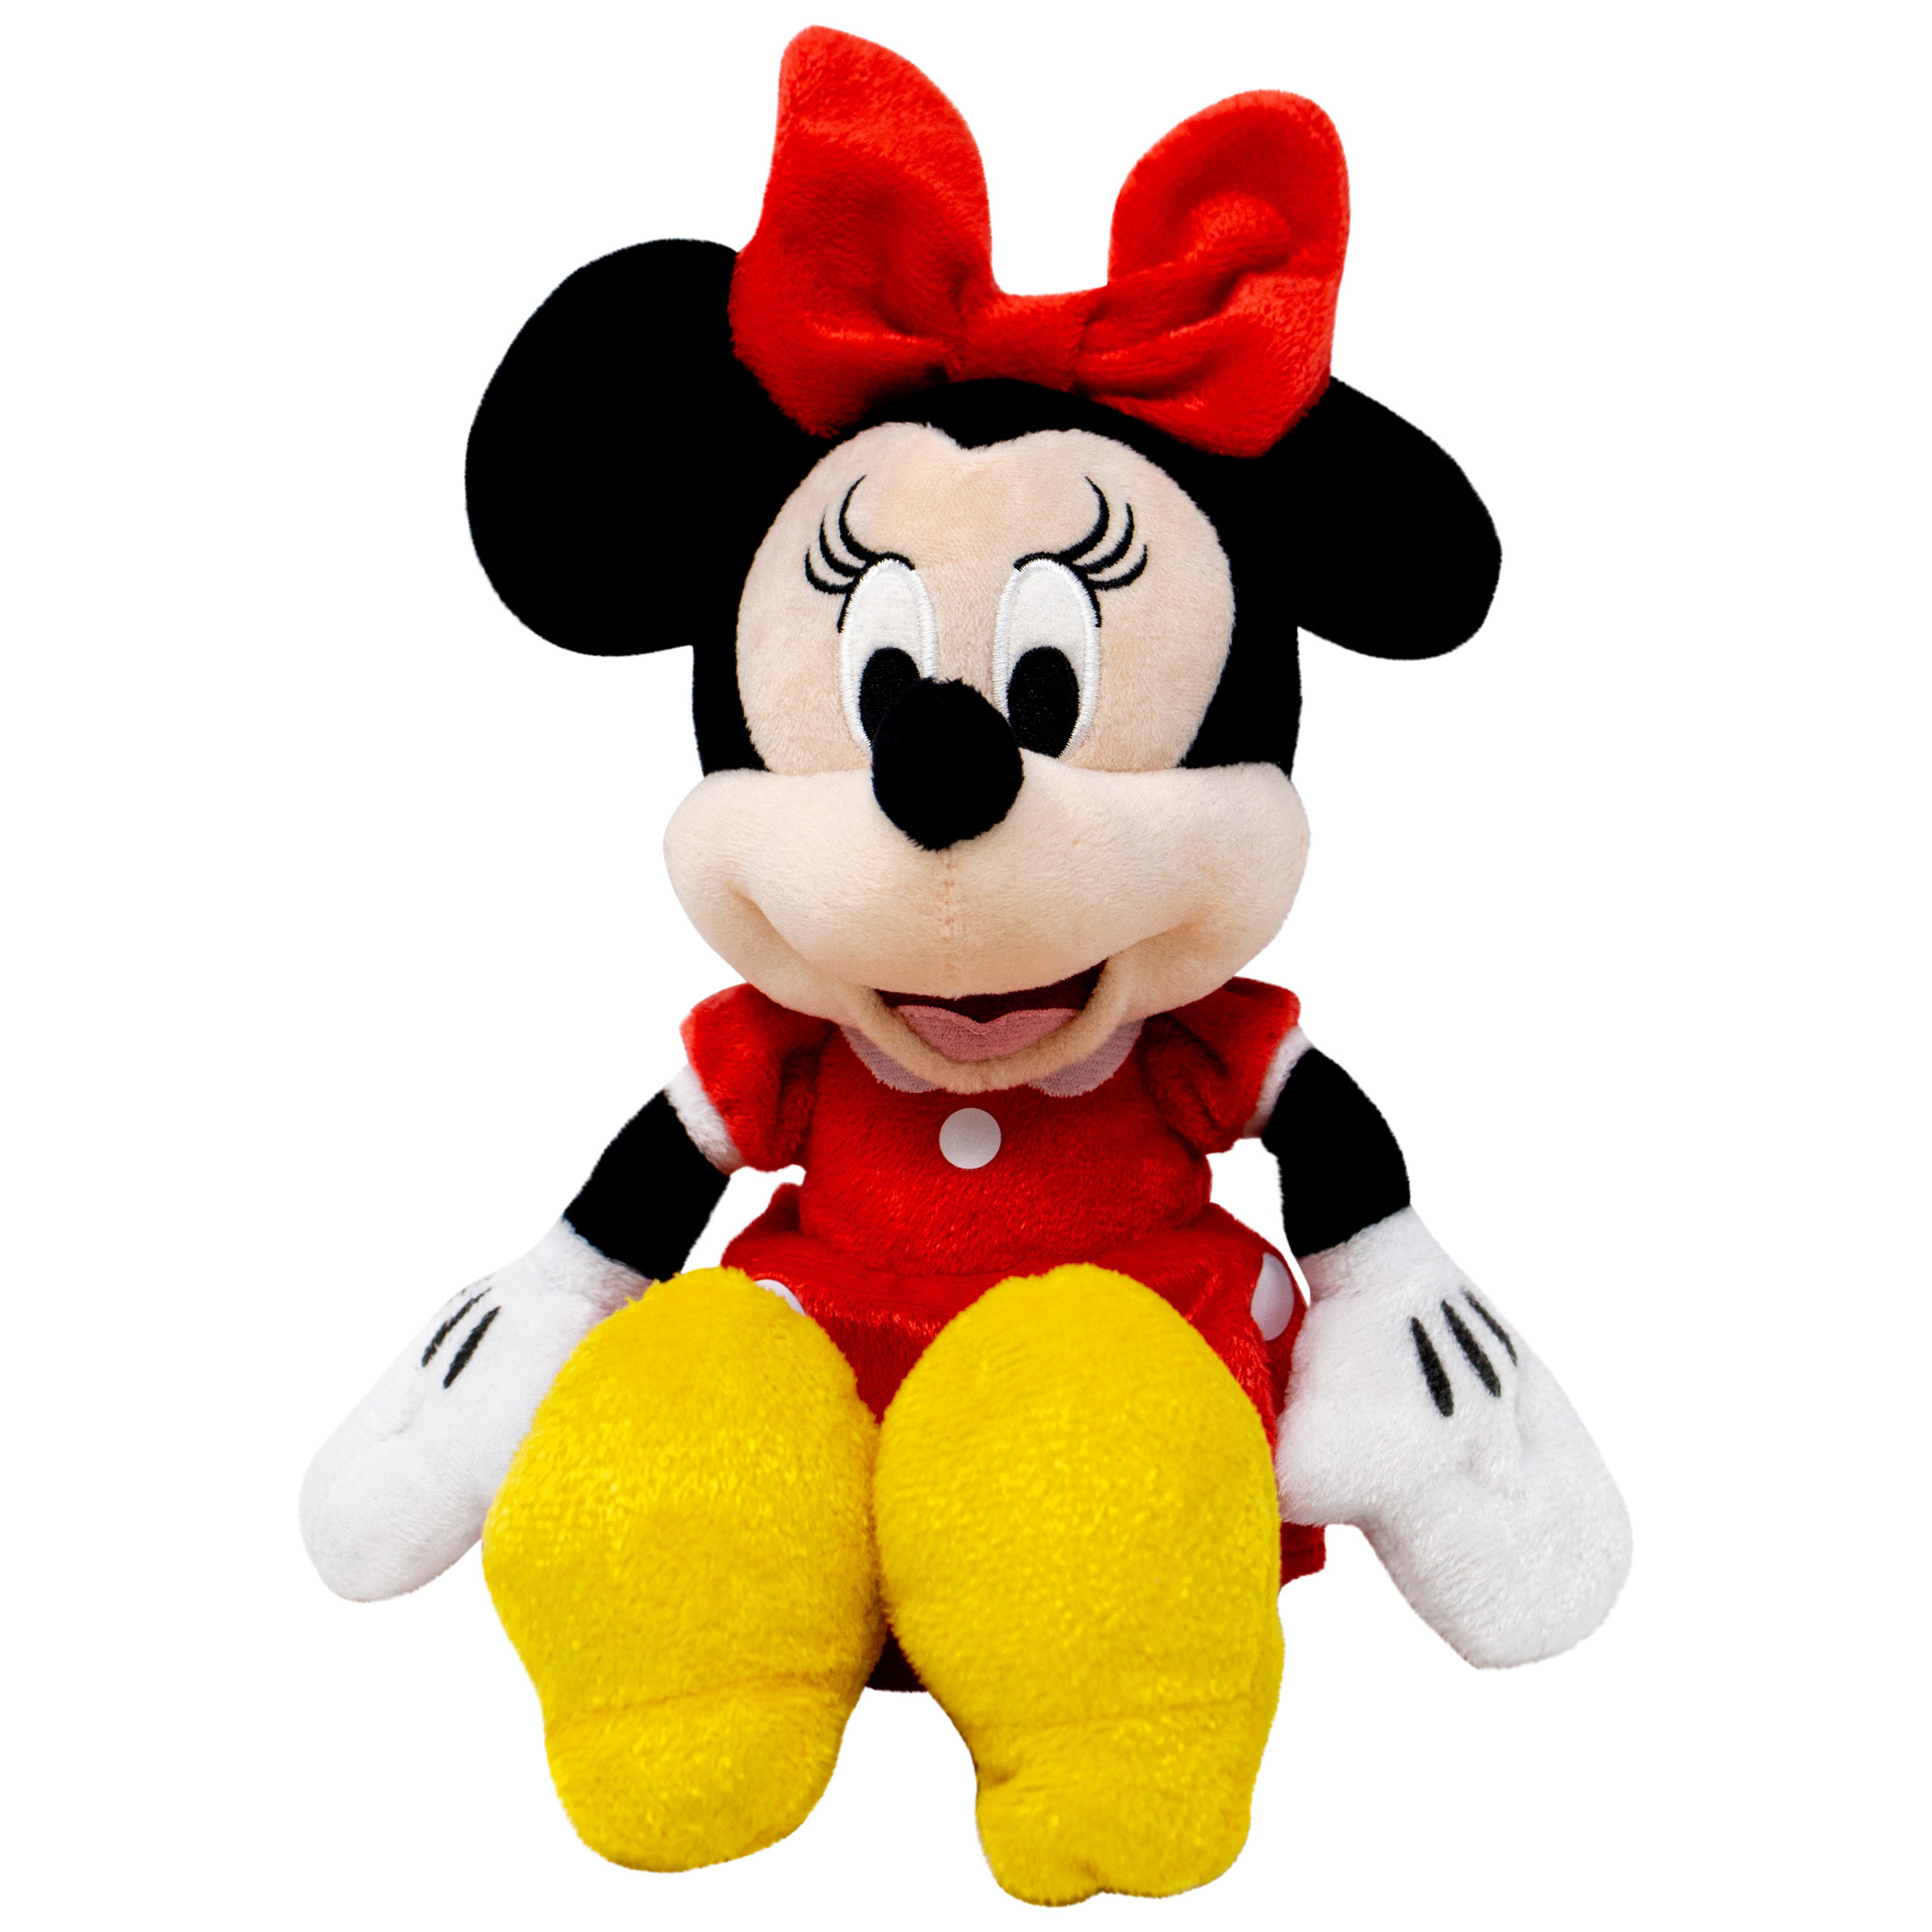 Disney Minnie Mouse Red Dress 11 Inch Plush Doll